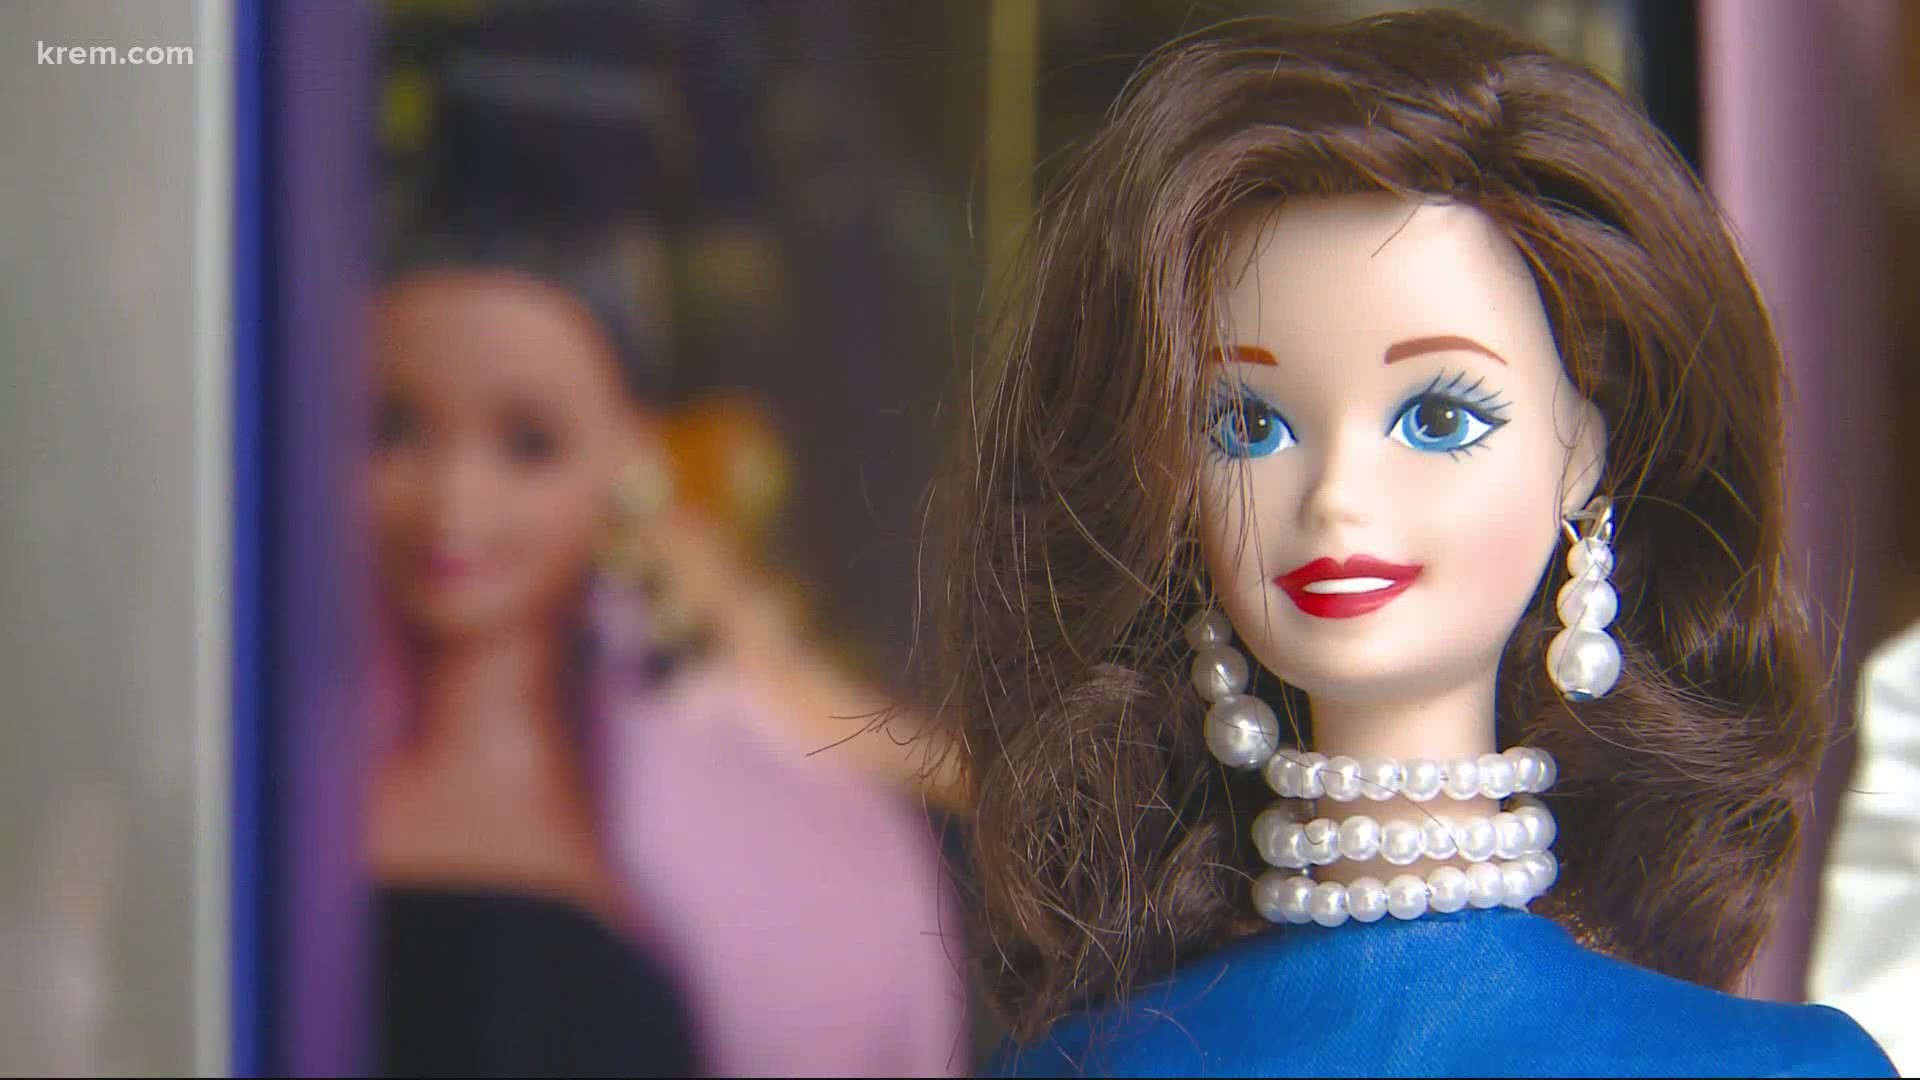 barbie set barbie doll